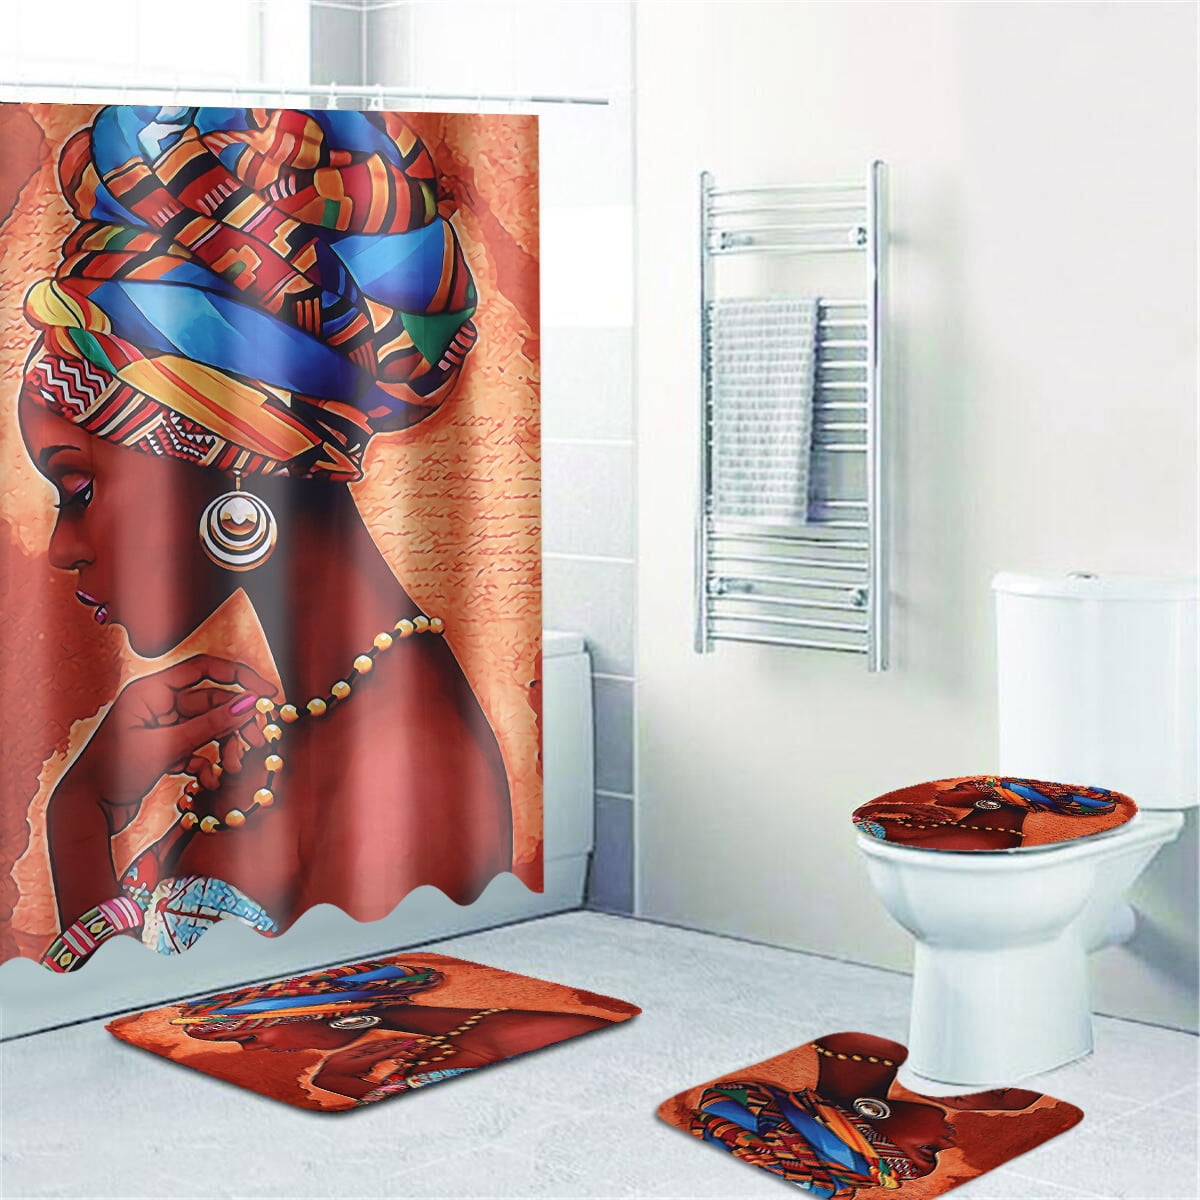 Bath Mat Set Bathroom Shower Curtain Extra Long Non-Slip Rug Toilet Lid Cover